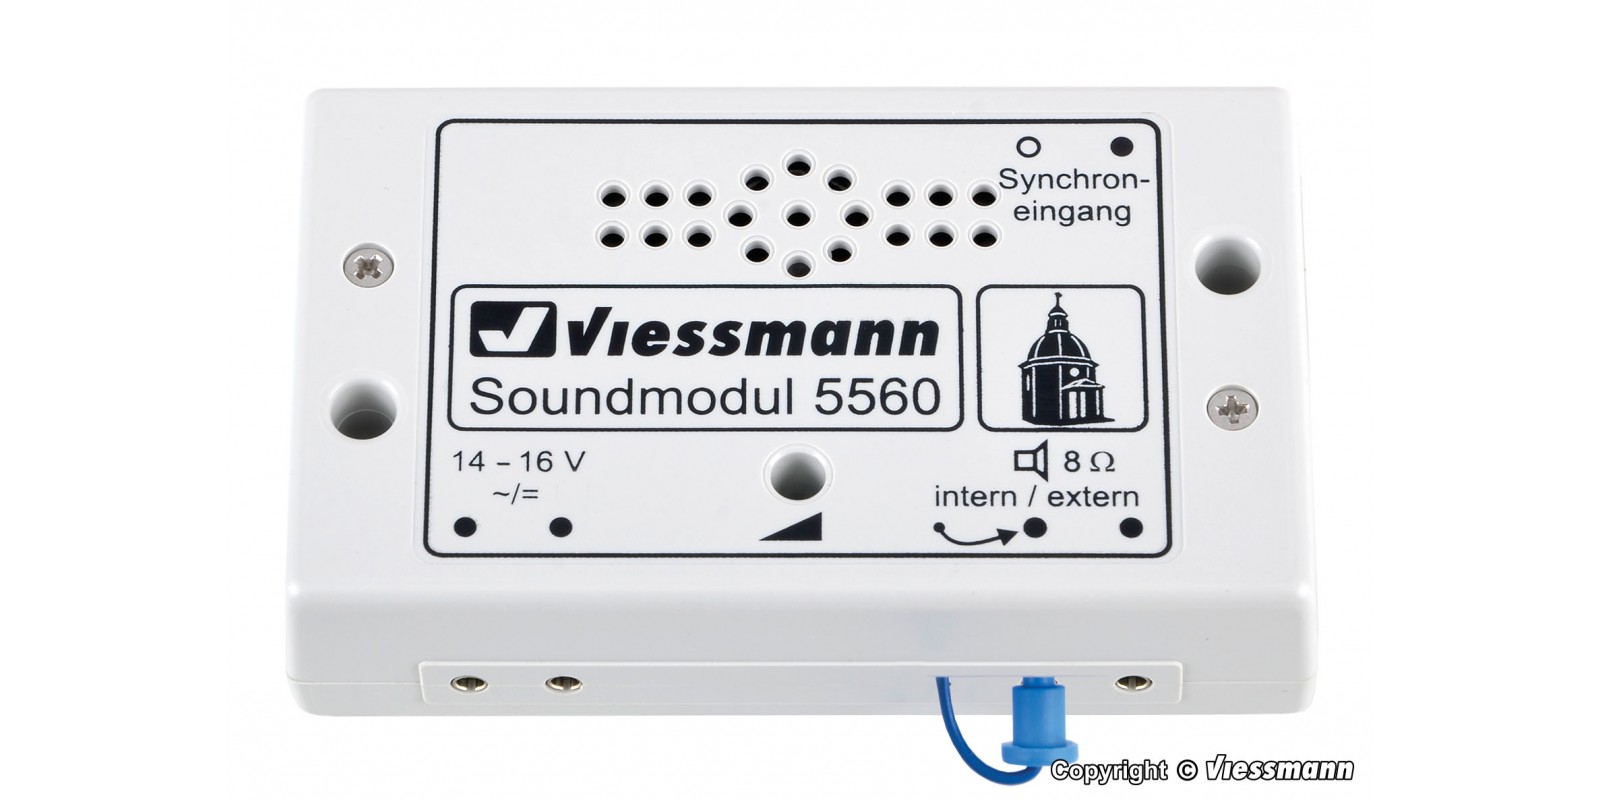 VI5560 Sound module Church Bell